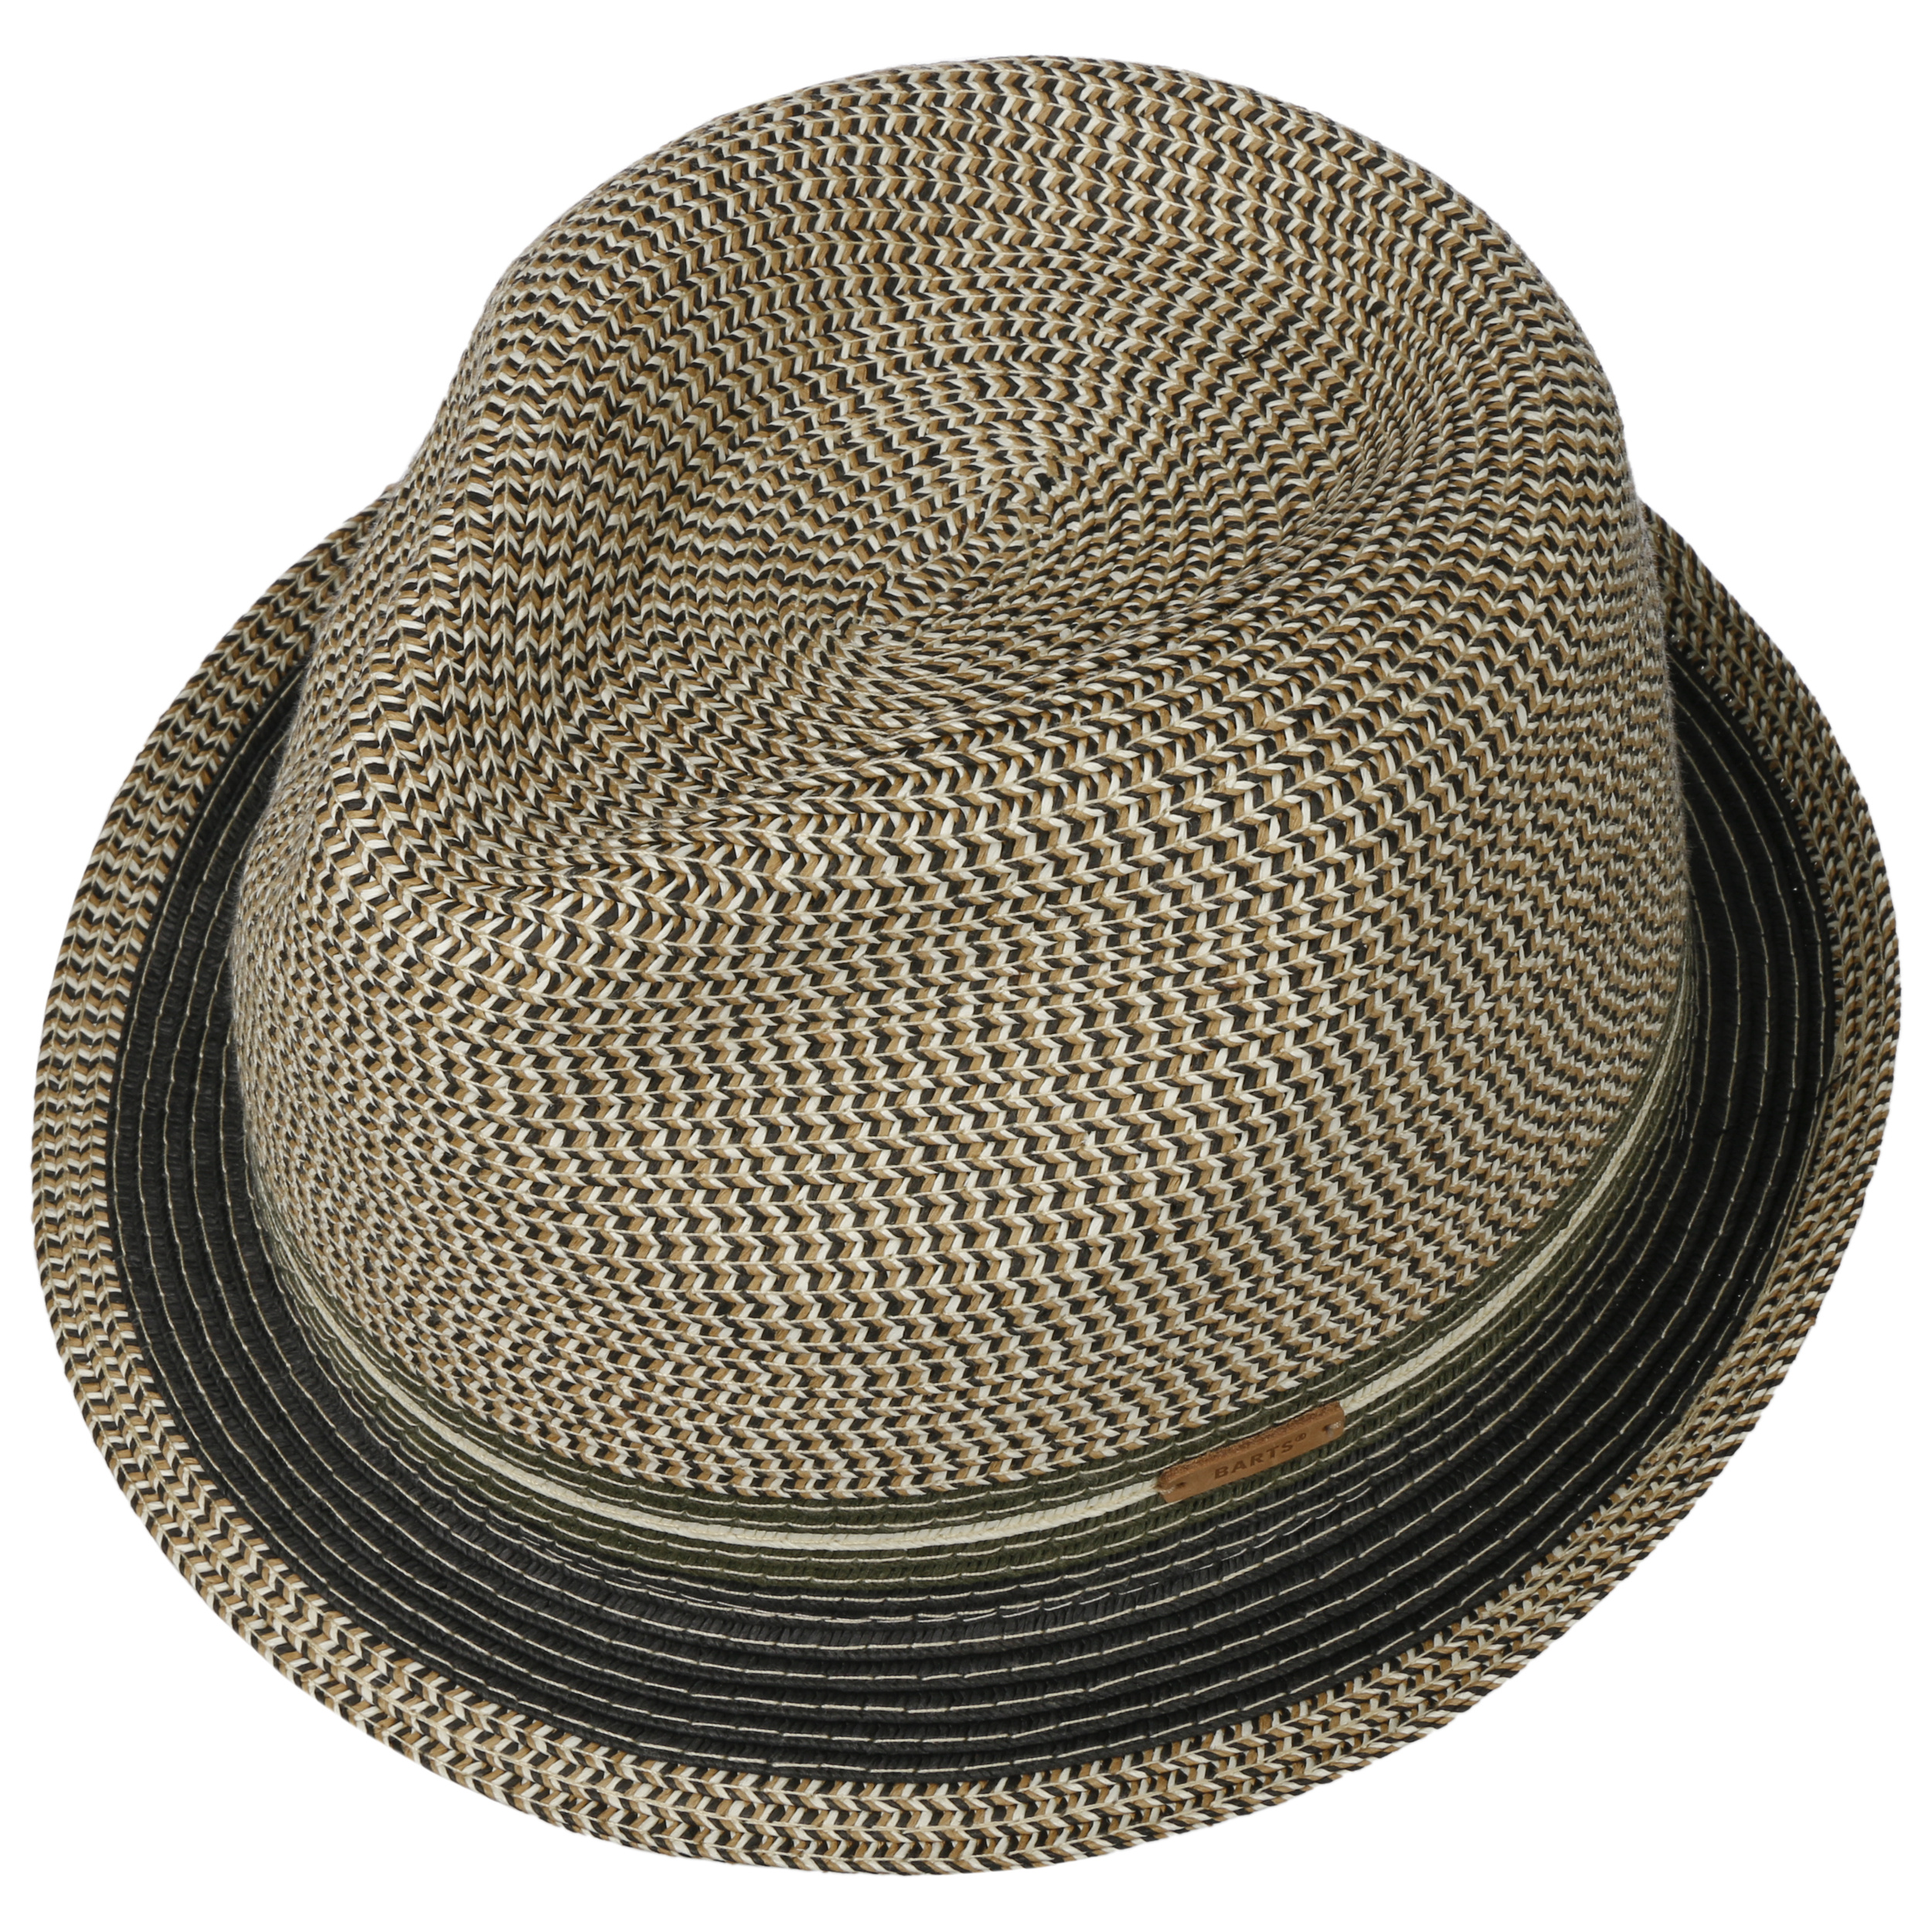 Fluoriet Trilby by Hat 32,90 - £ Barts